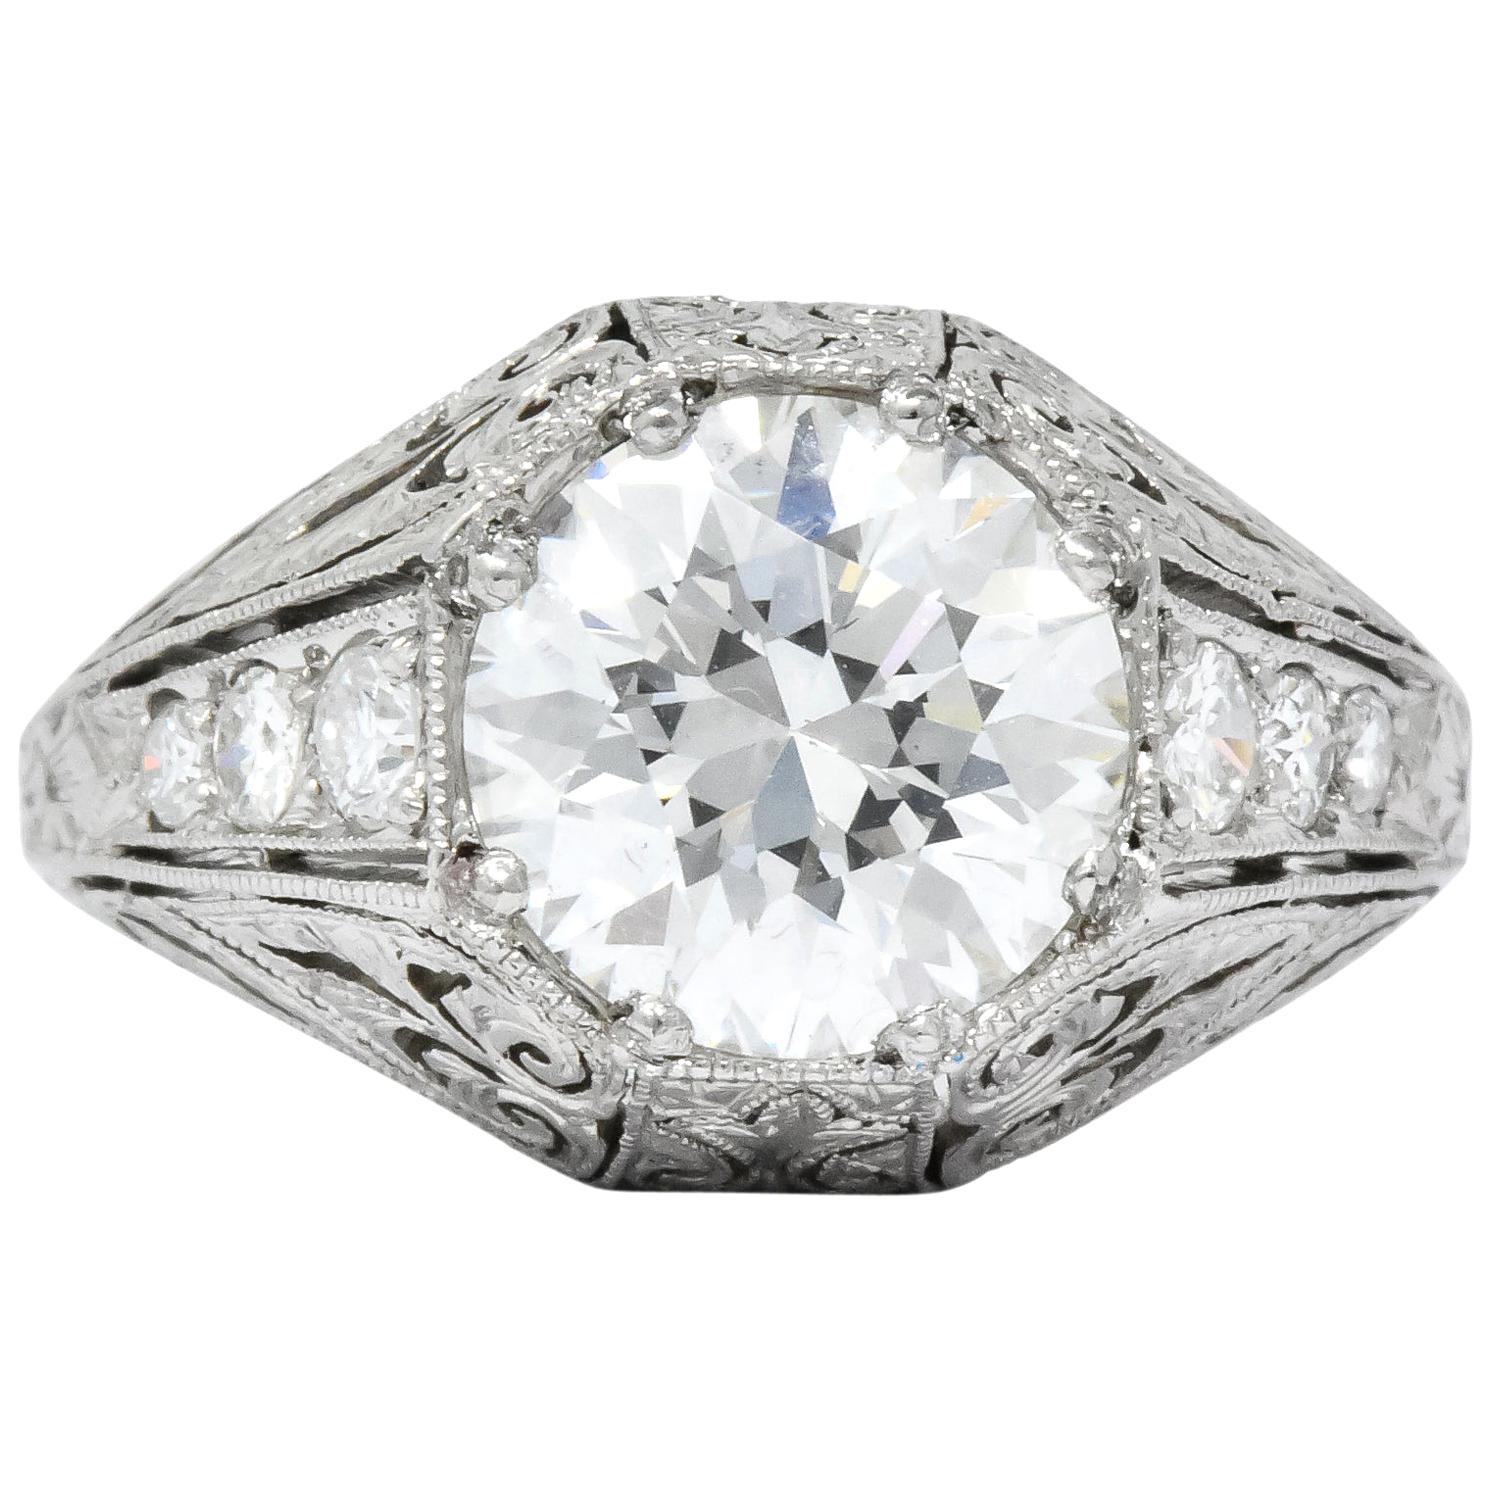 Exquisite Edwardian 2.55 Carat Diamond Platinum Engagement Ring GIA